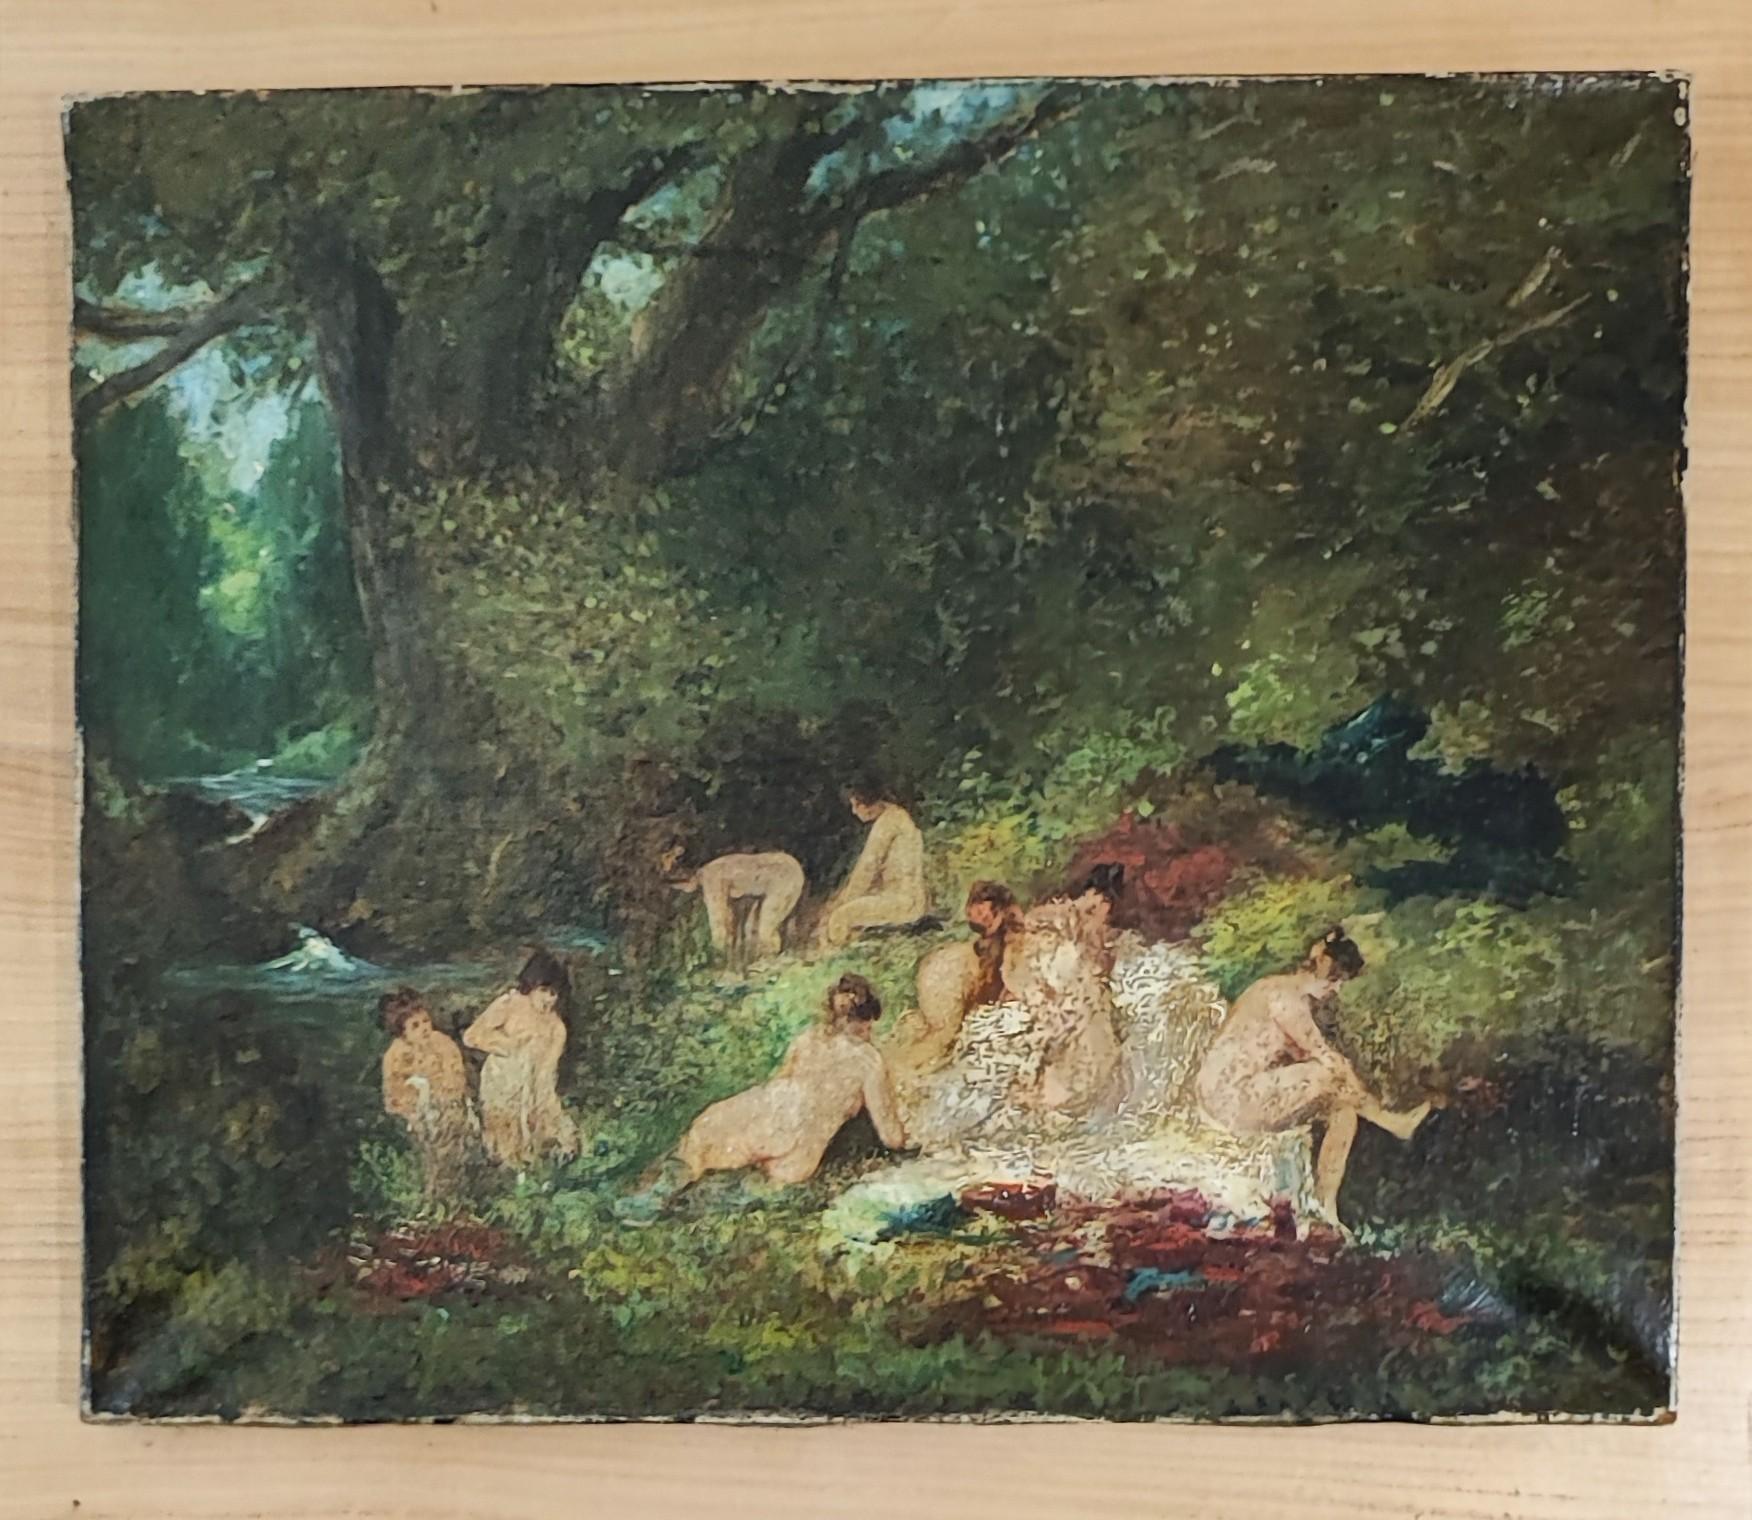 Nymphs by the River - Painting by Narcisse Virgilio Díaz de la Peña